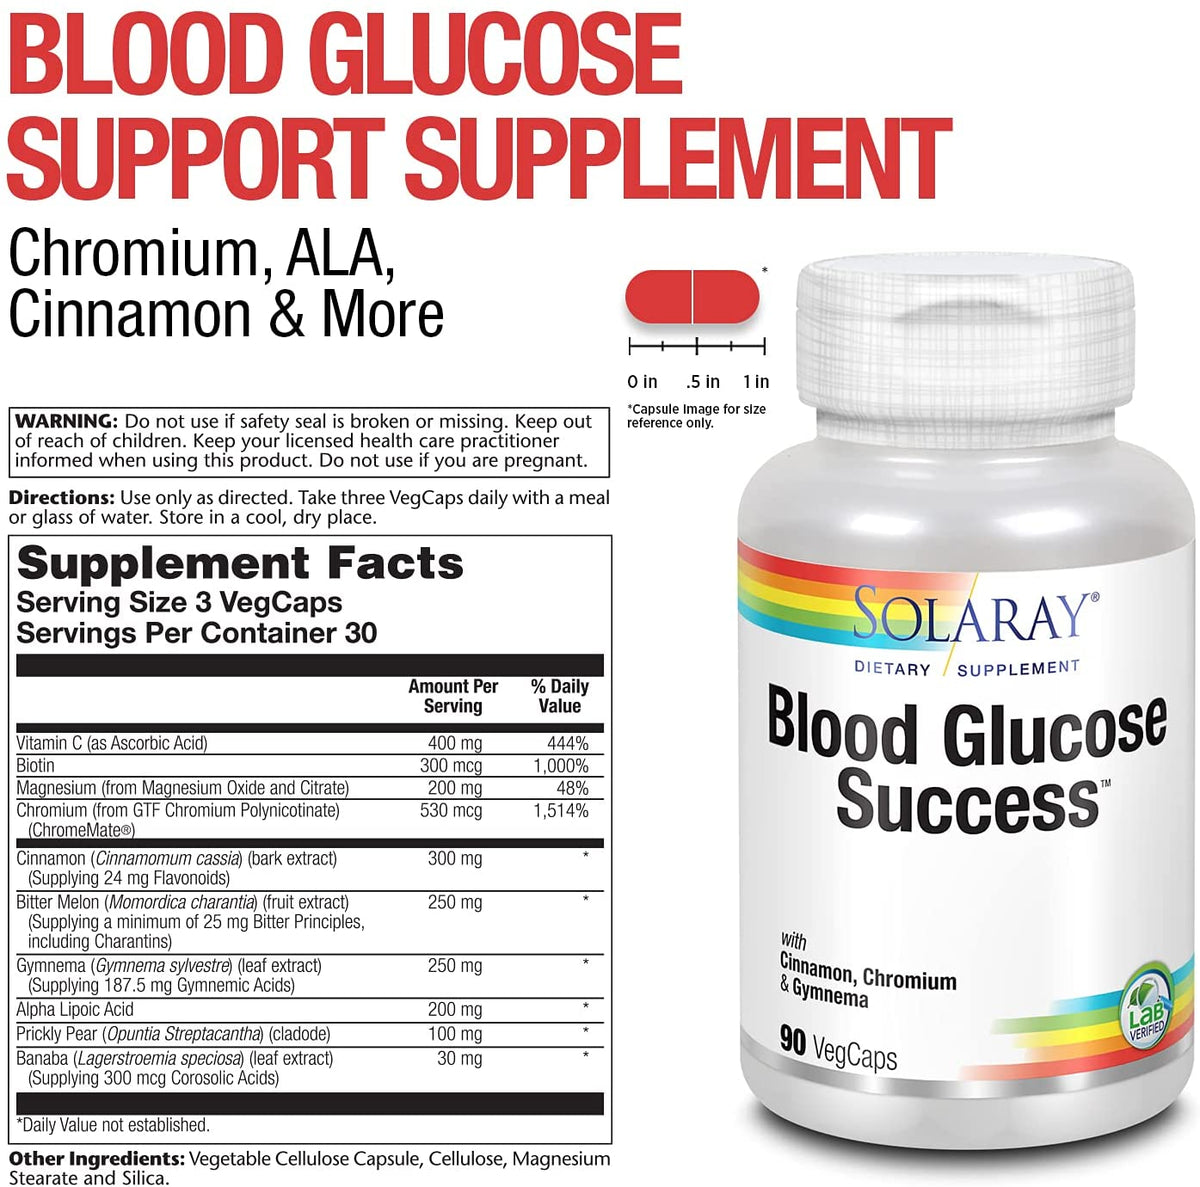 Blood Glucose Success - Vitamins, Minerals & Herbs - 30 Servings - 90 VegCaps